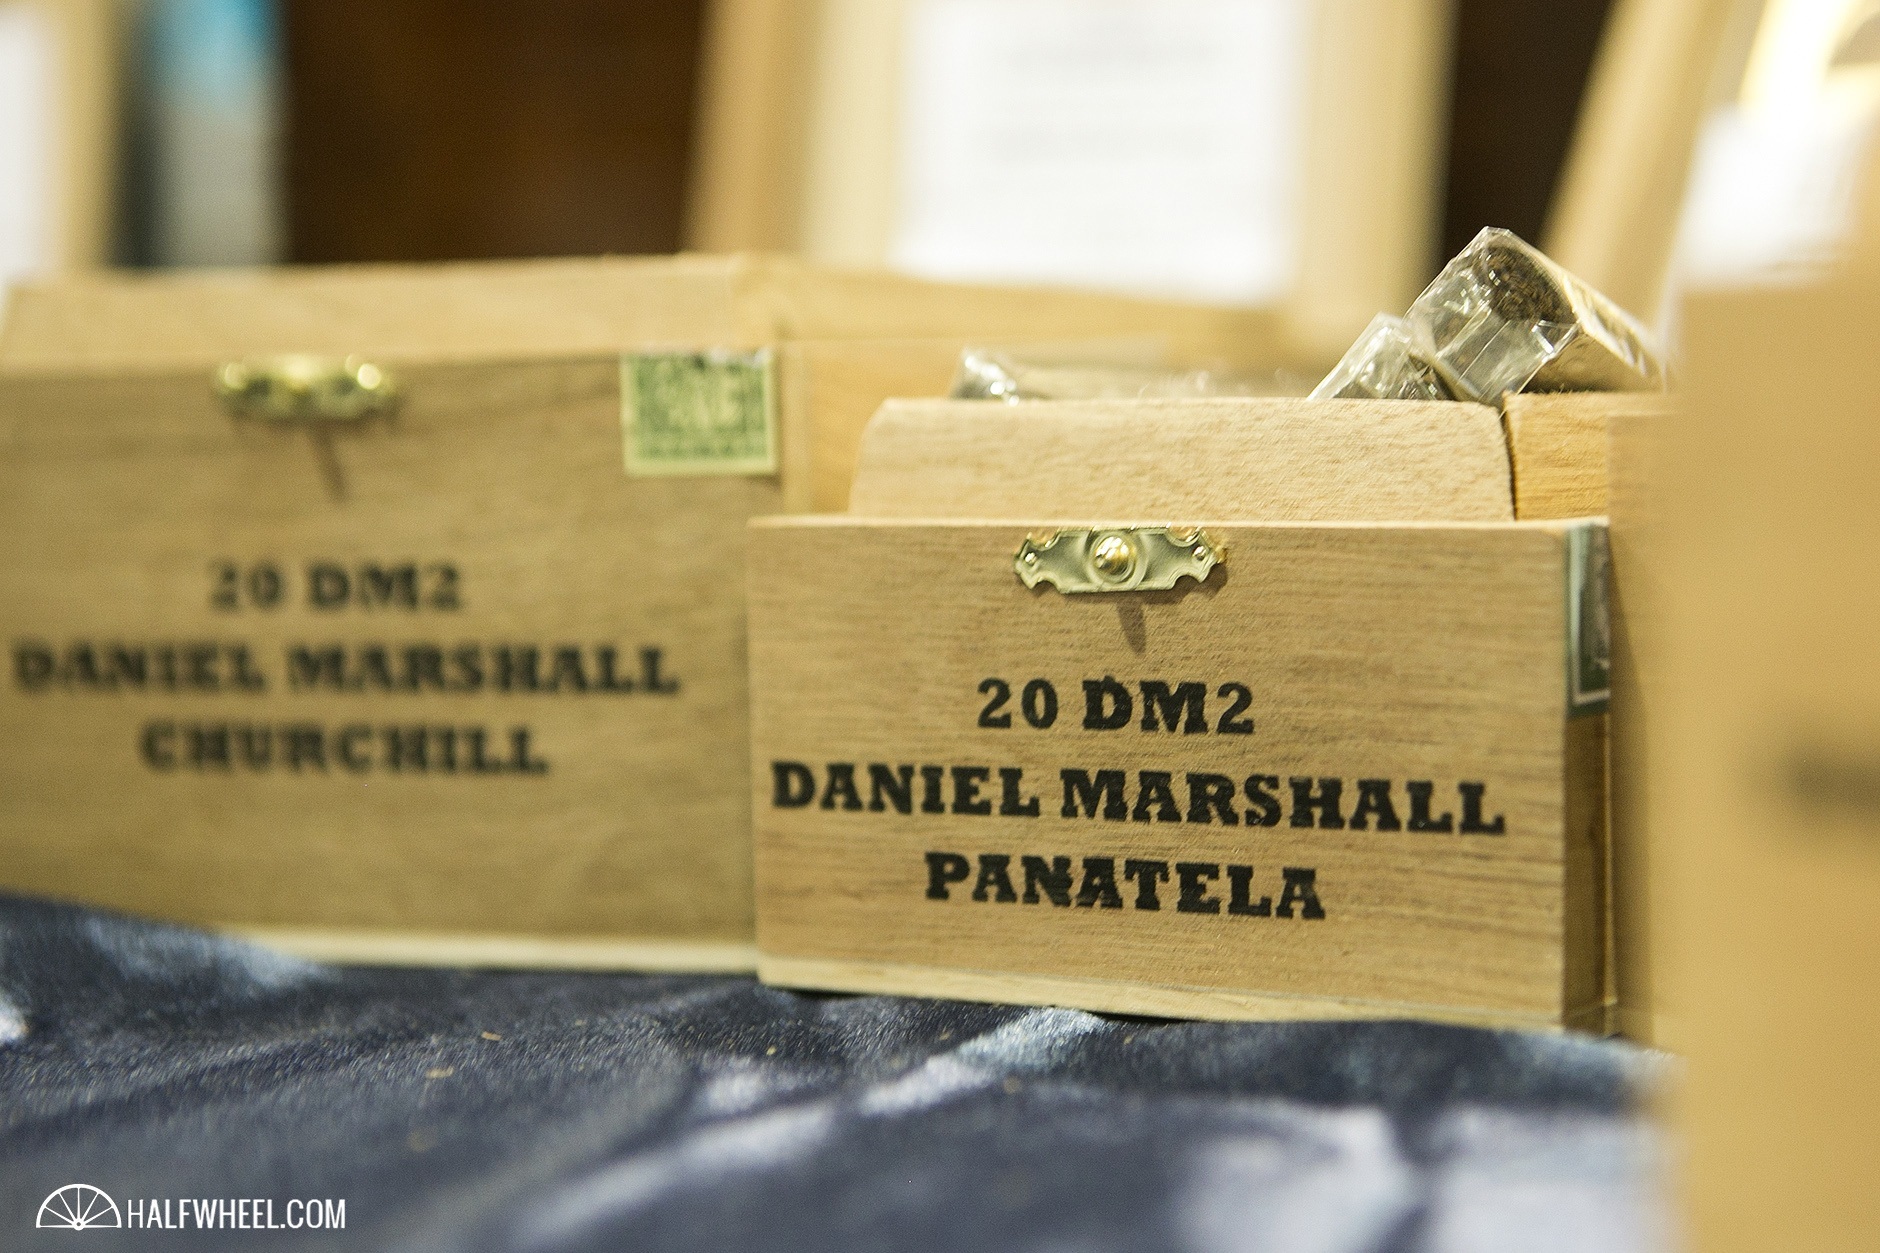 Daniel Marshall DM2 Red Label Panatela